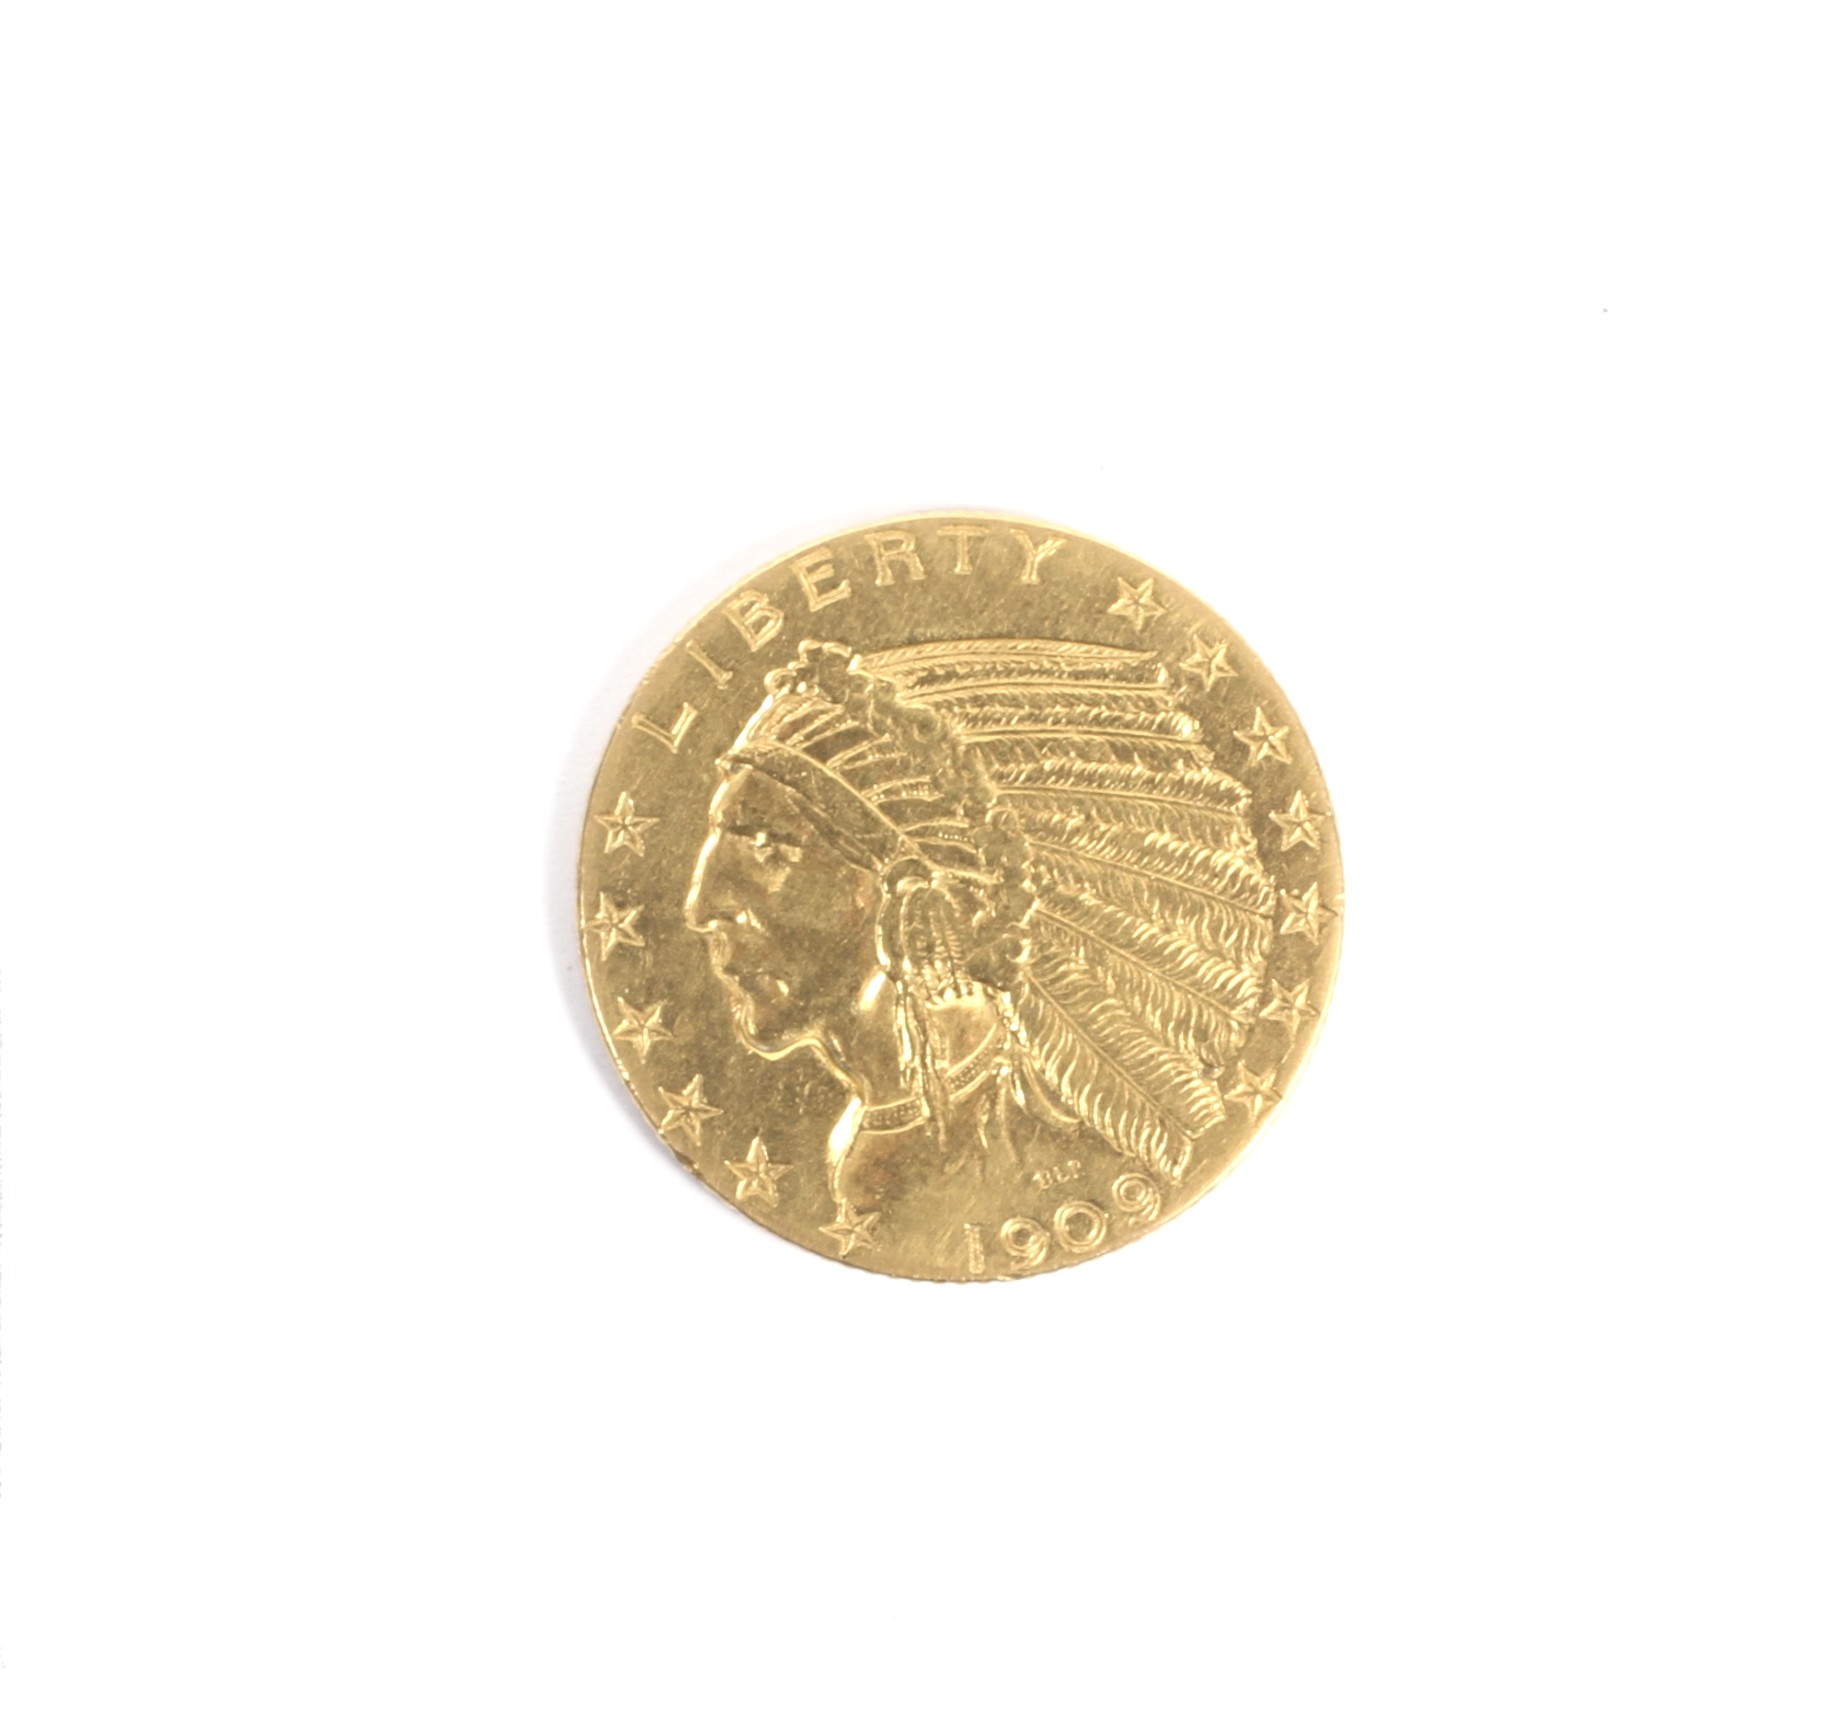 USA 1909 gold 5 dollar coin, weight 8.